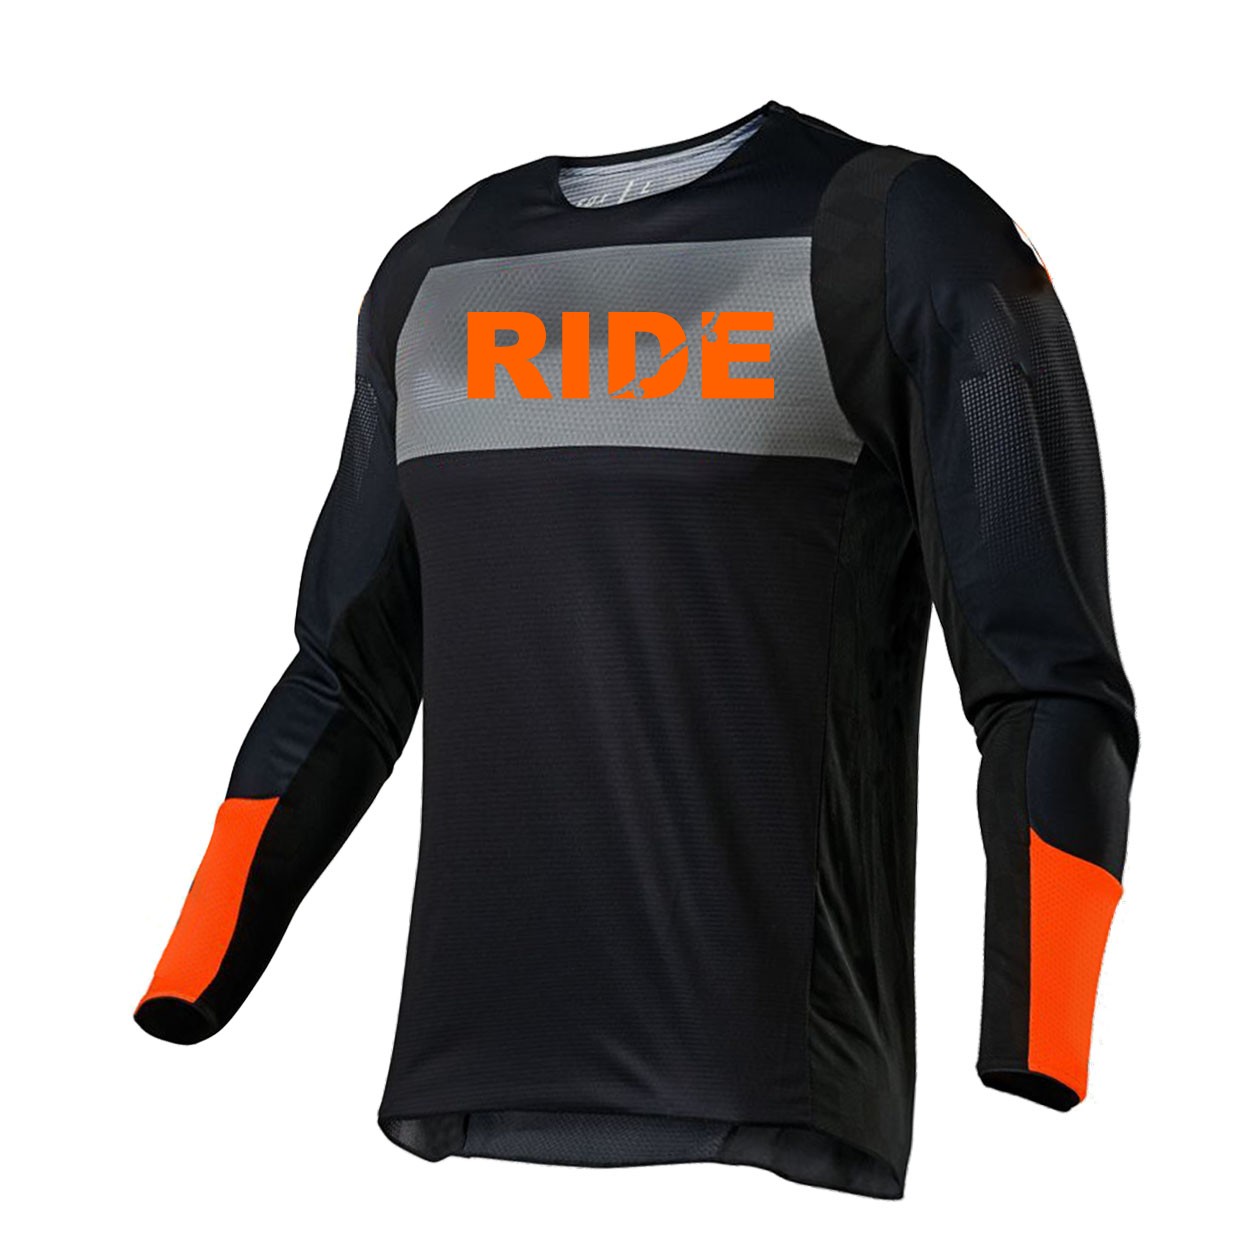 Ride Skateboard Logo Classic Performance Jersey Long Sleeve Shirt Black/Gray/Orange (Orange Logo)